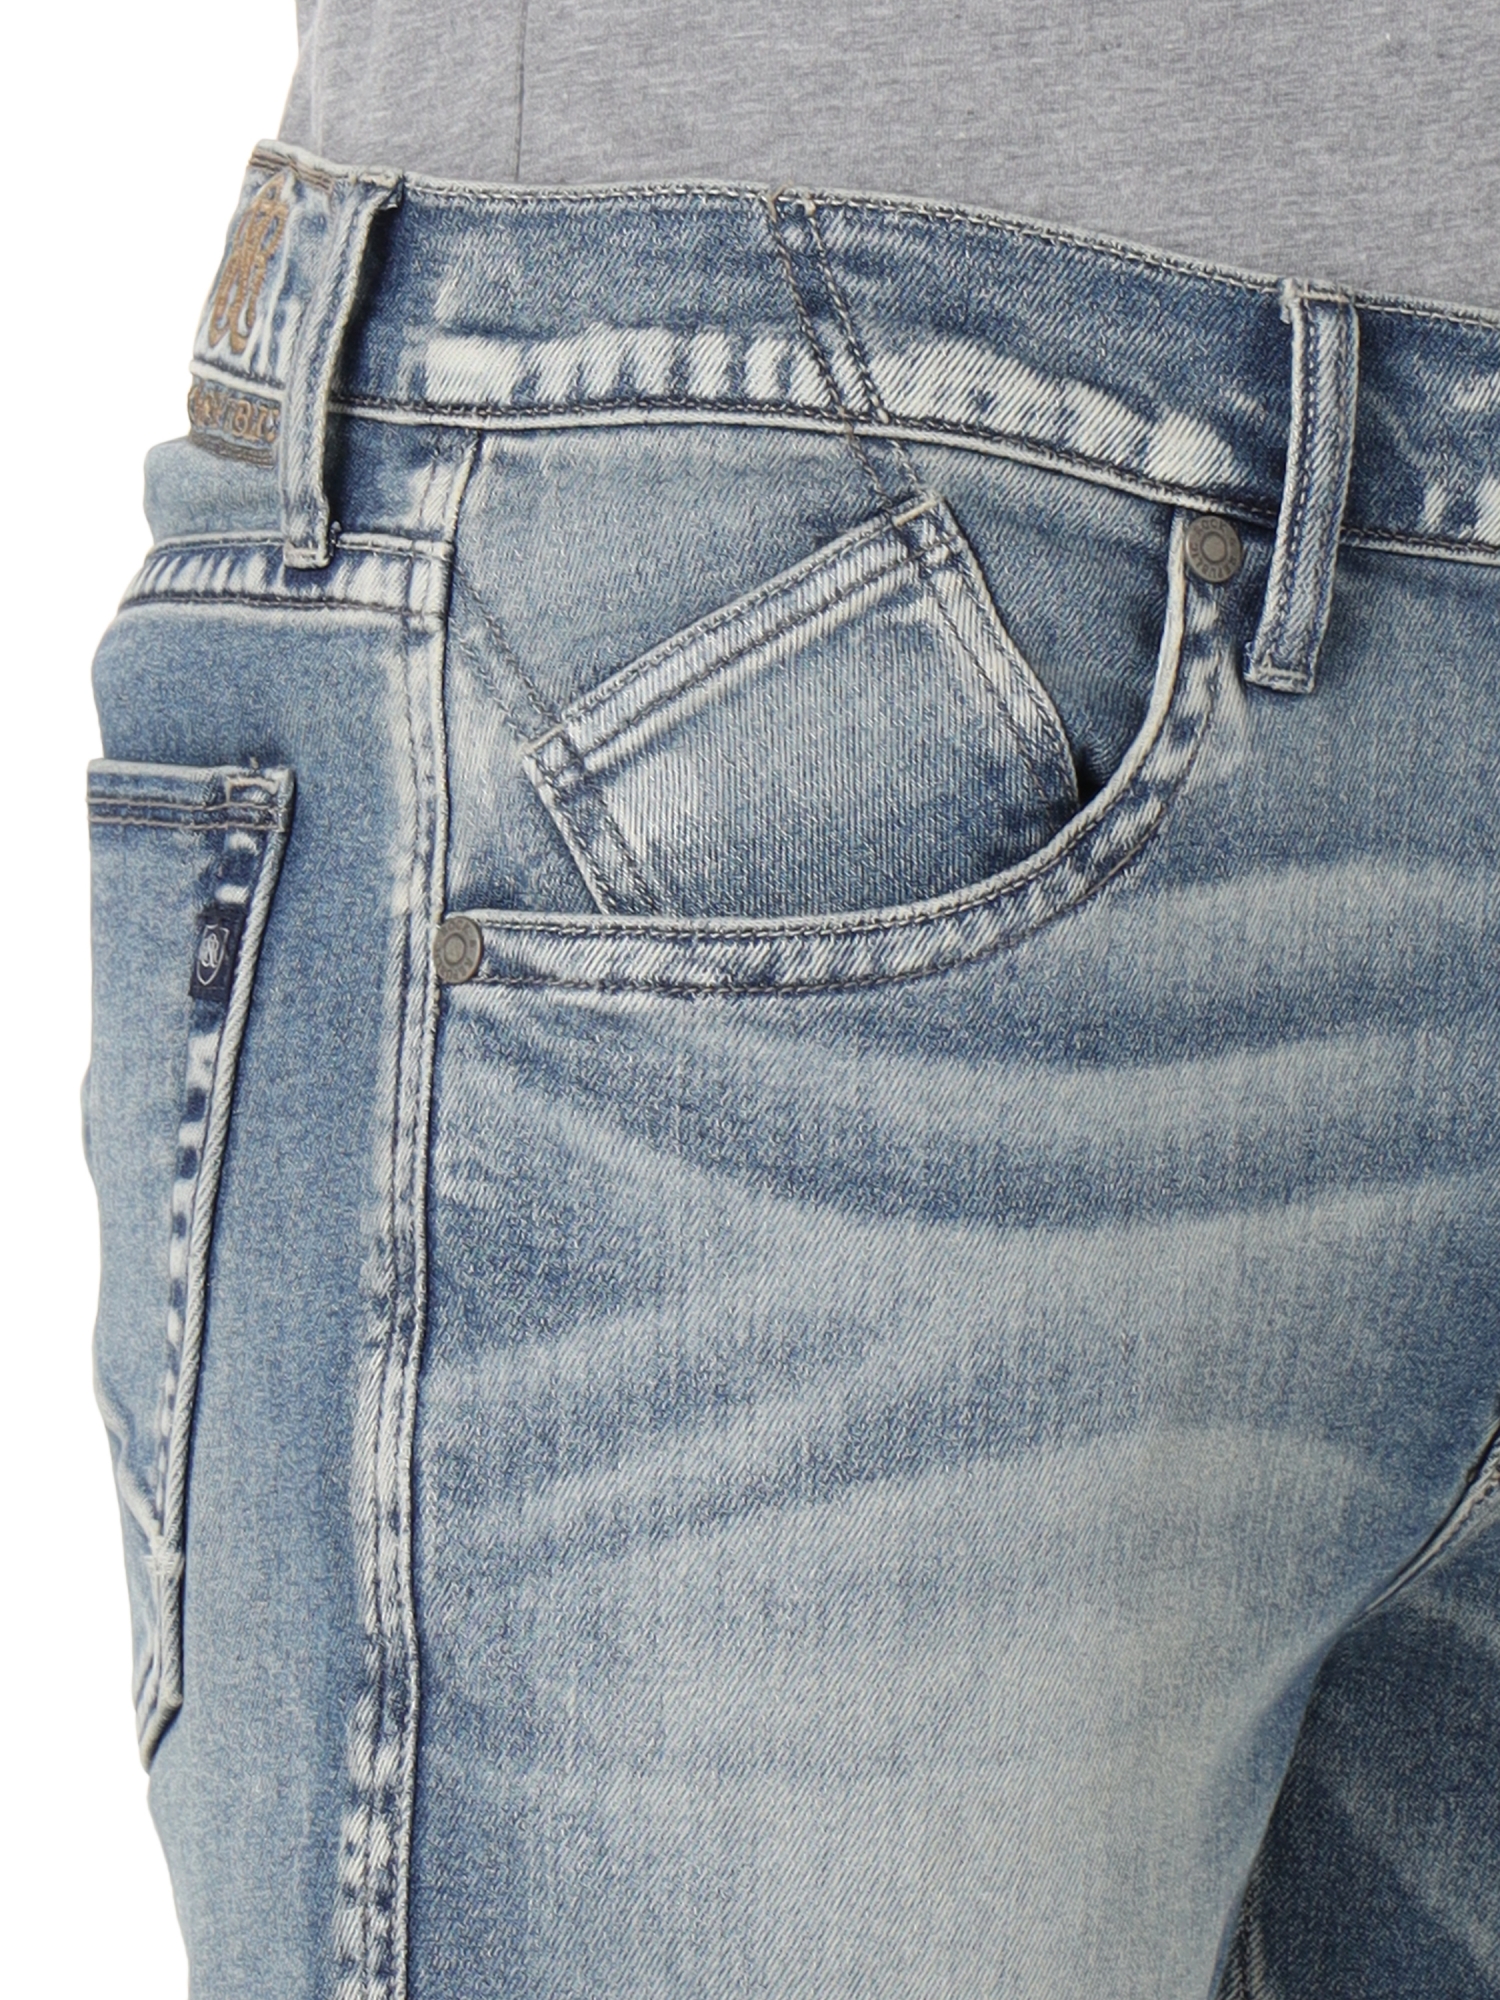 Rock & Republic Men's Straight Leg Jean with Ultra Comfort Denim - image 2 of 5